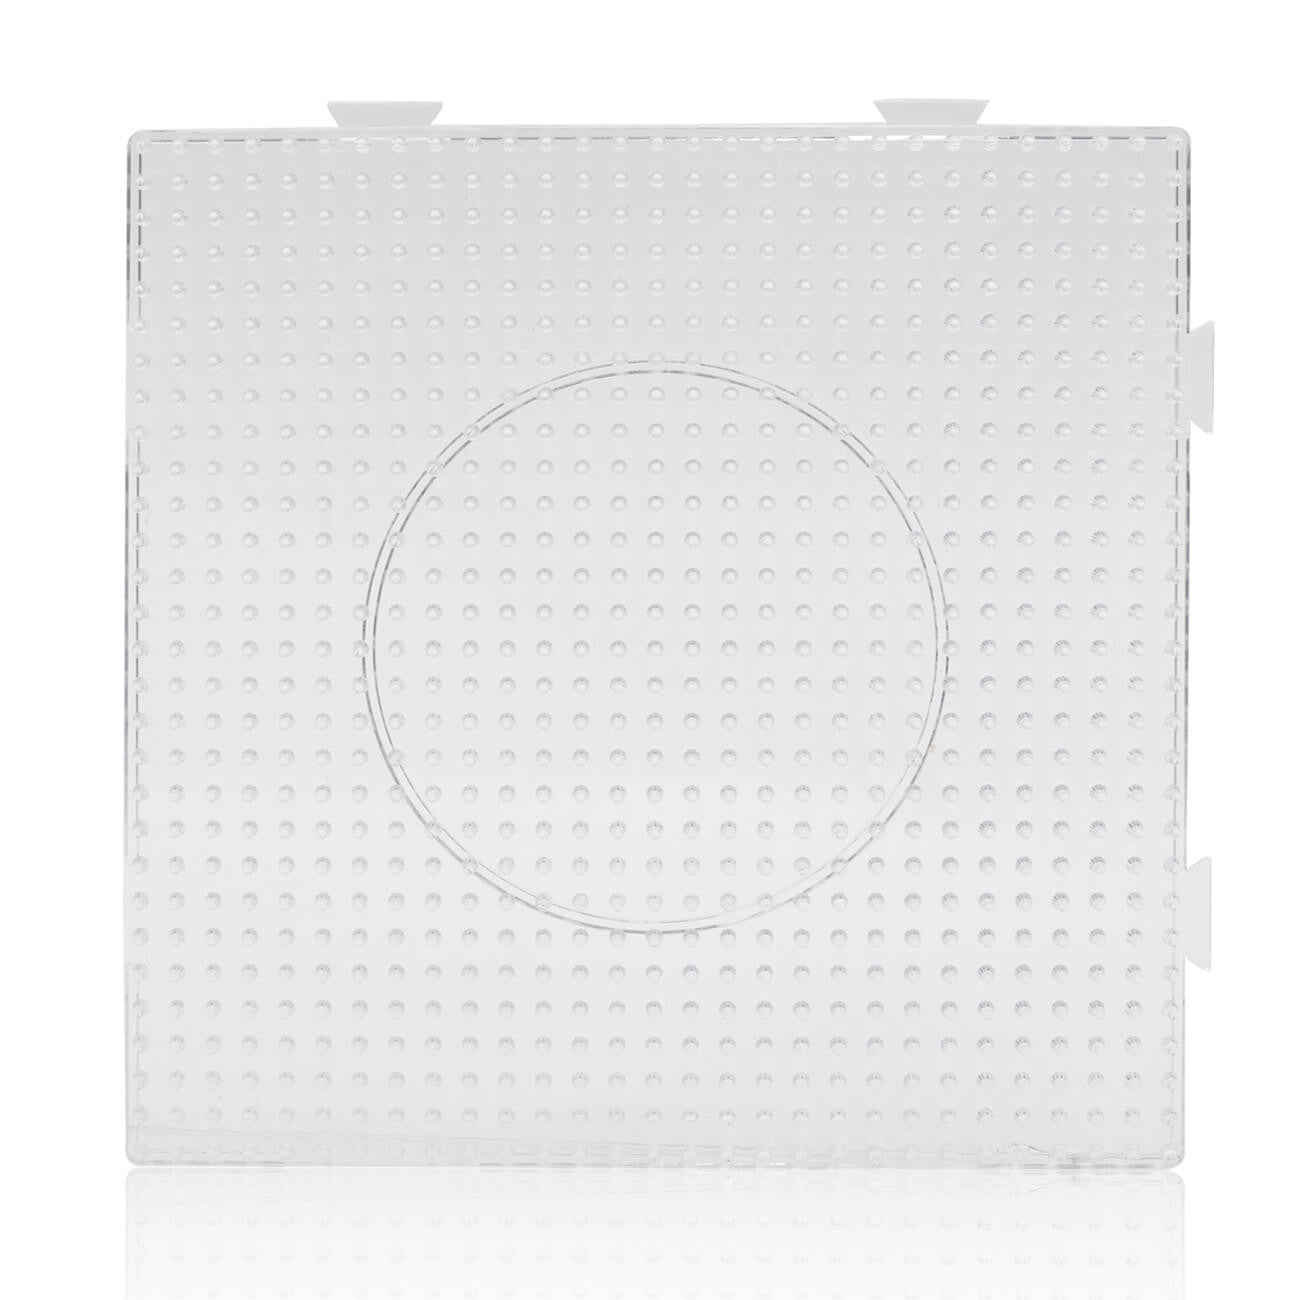 Artkalbeads 5 мм прозрачная большая квадратная накладка для миди бусин BP01-K